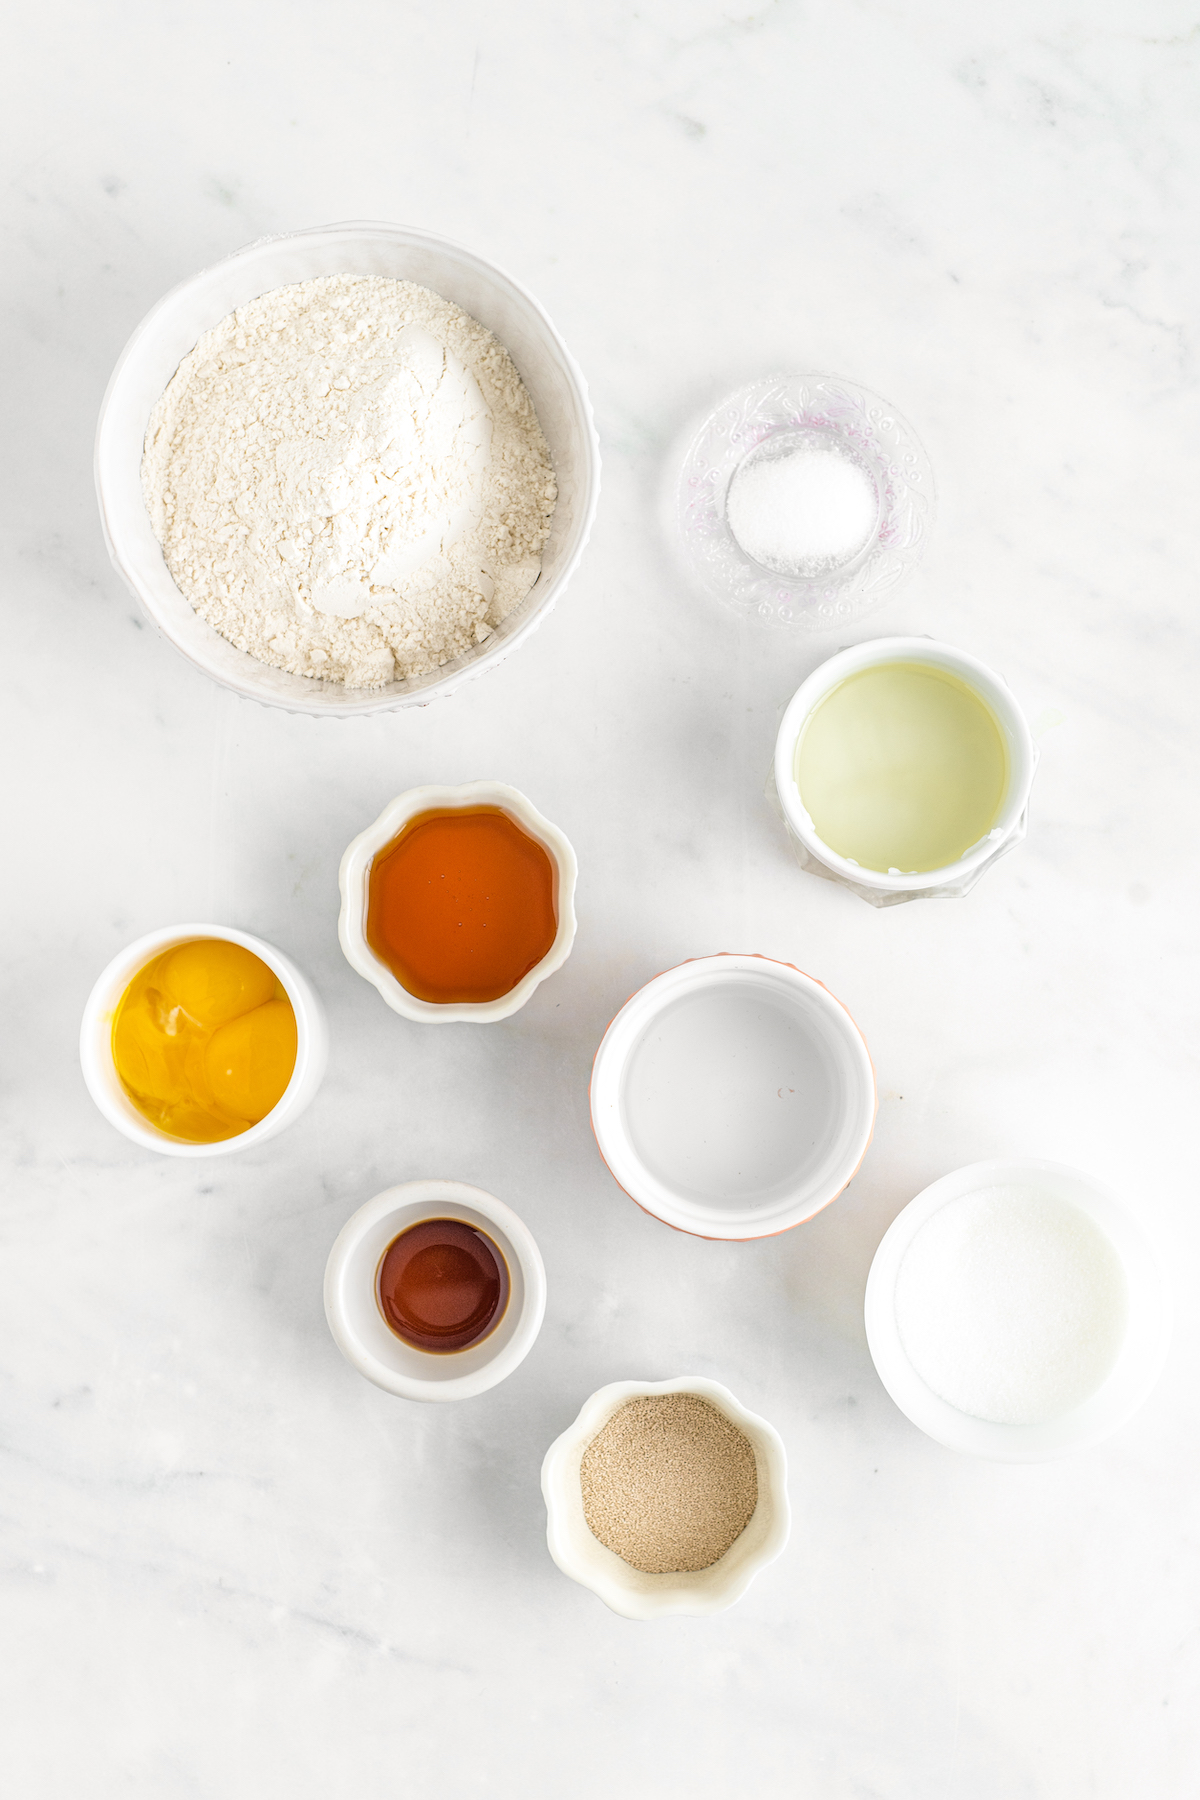 From top left: Flour, salt, melted shortening, egg yolks, vanilla, water, honey, yeast, sugar.